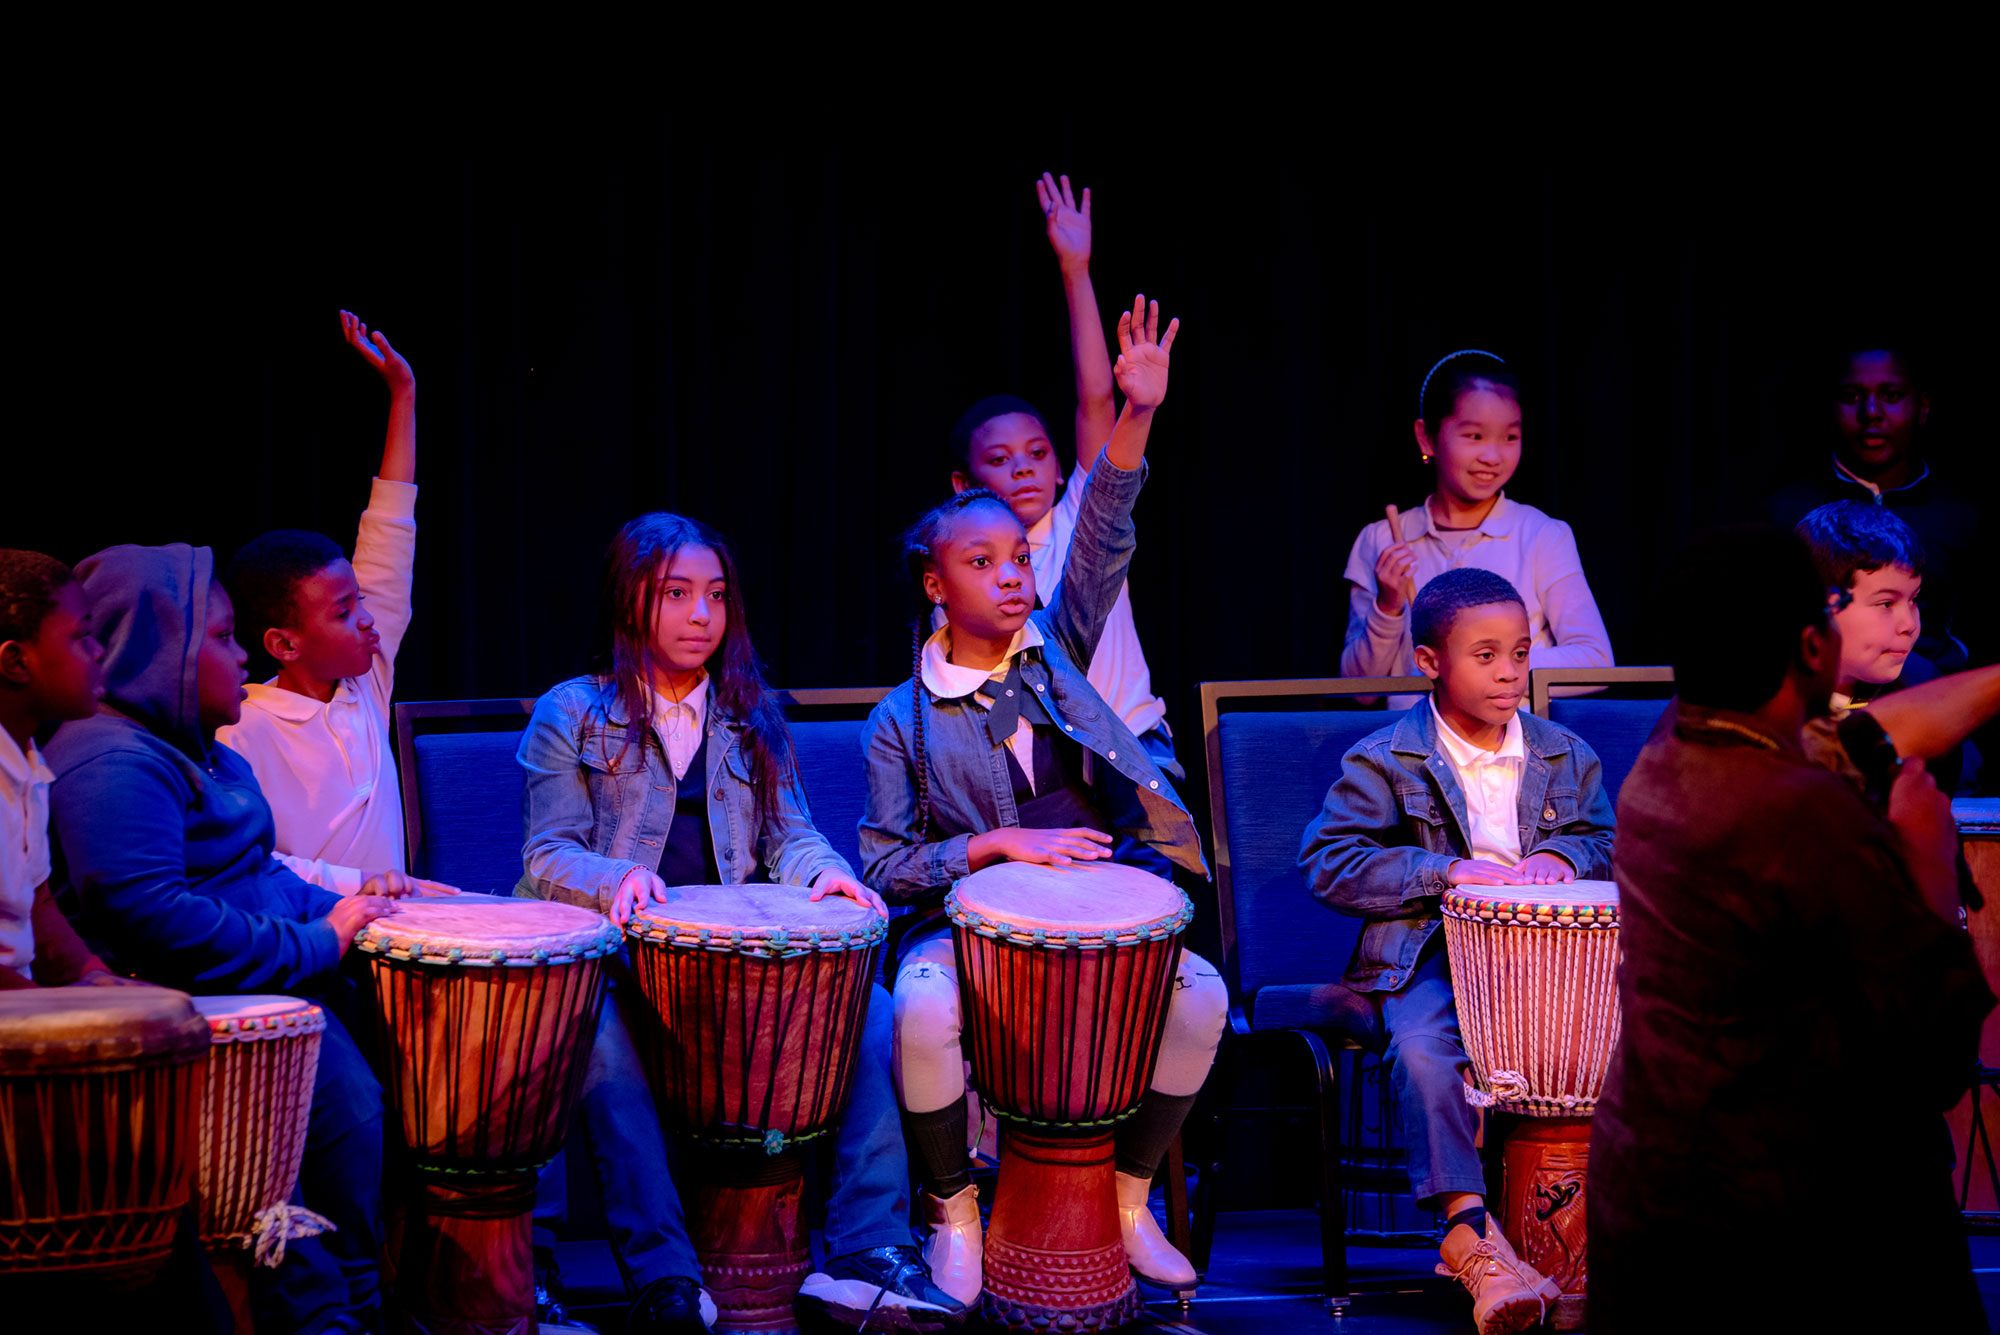 Creative Alliance | Youth Programs - Children drumming